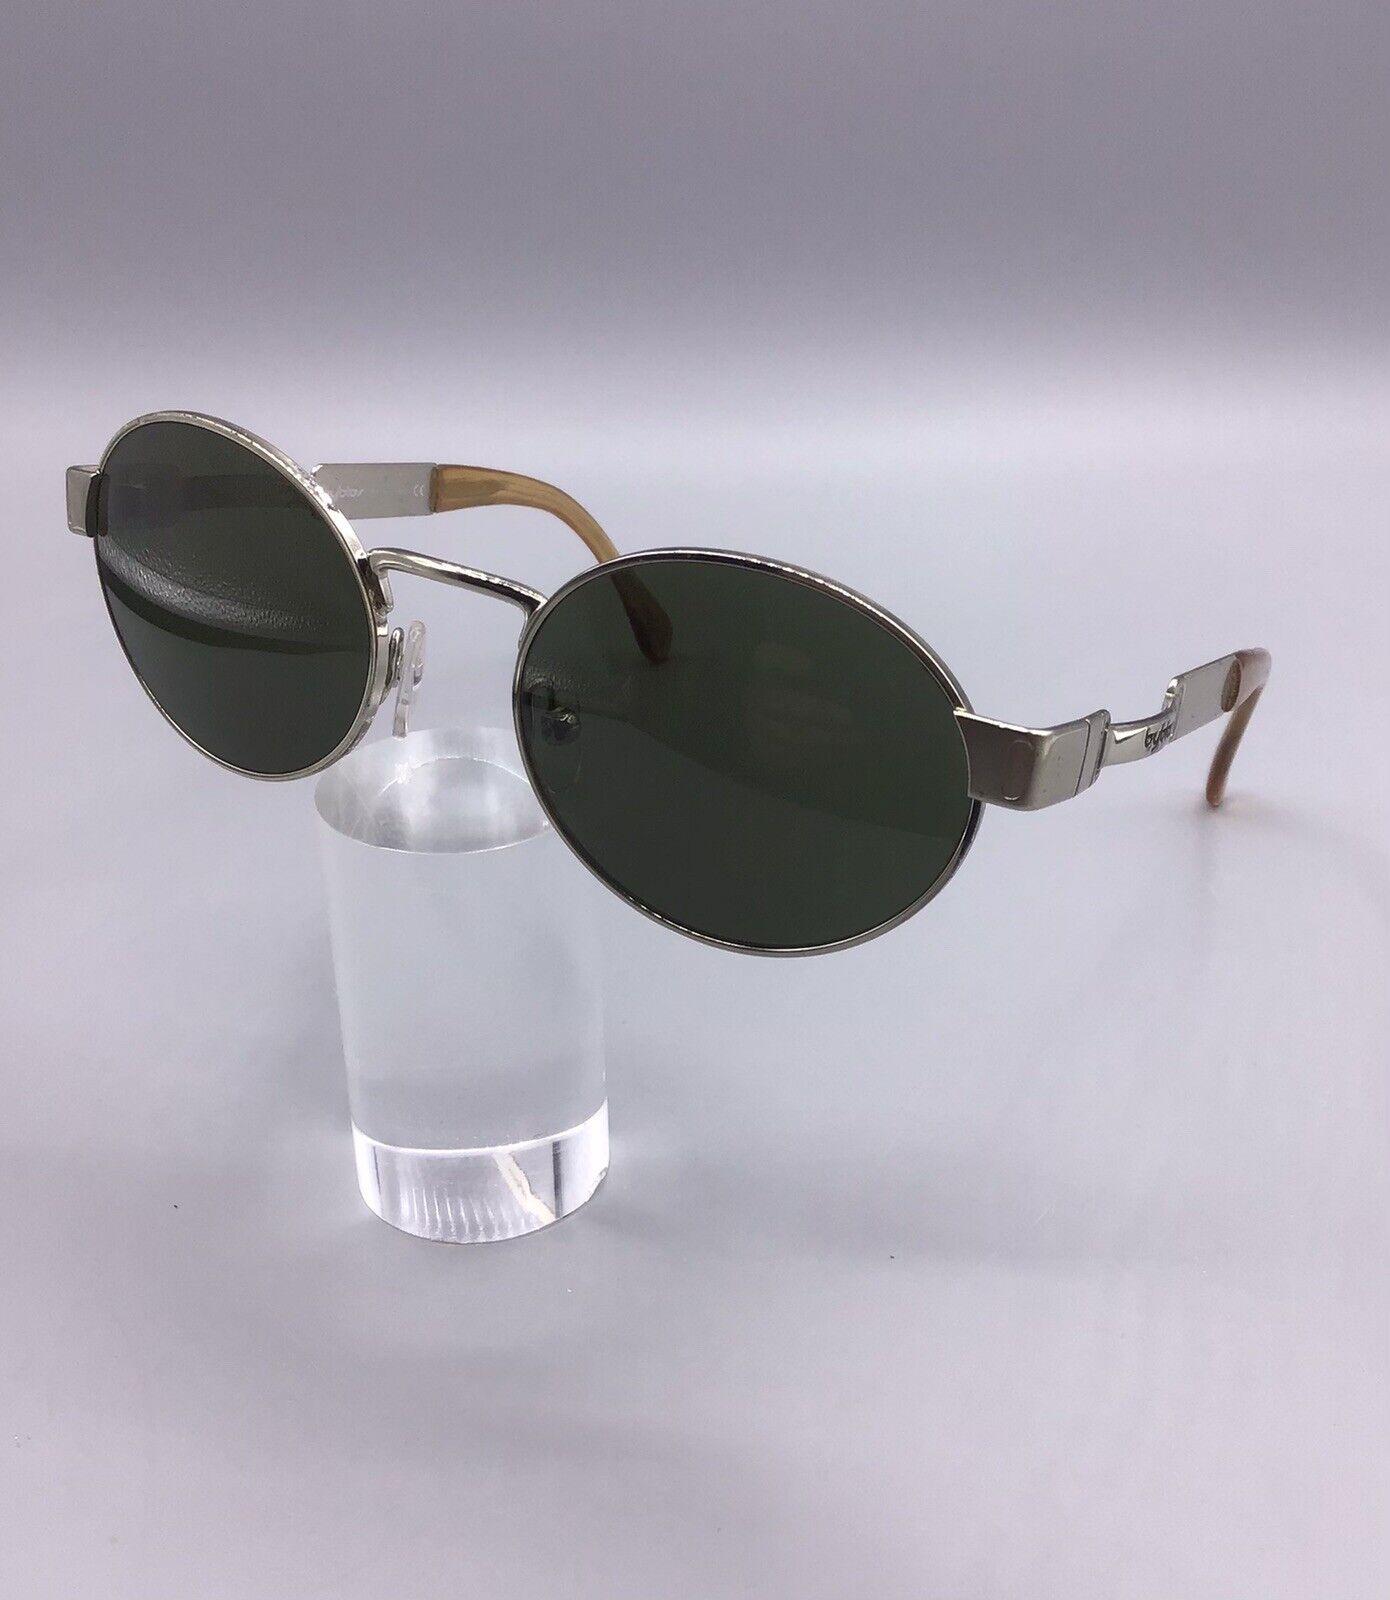 Byblos 621-S 3002 SMALL occhiale da sole Sunglasses vintage Lunettes Gafas Sol